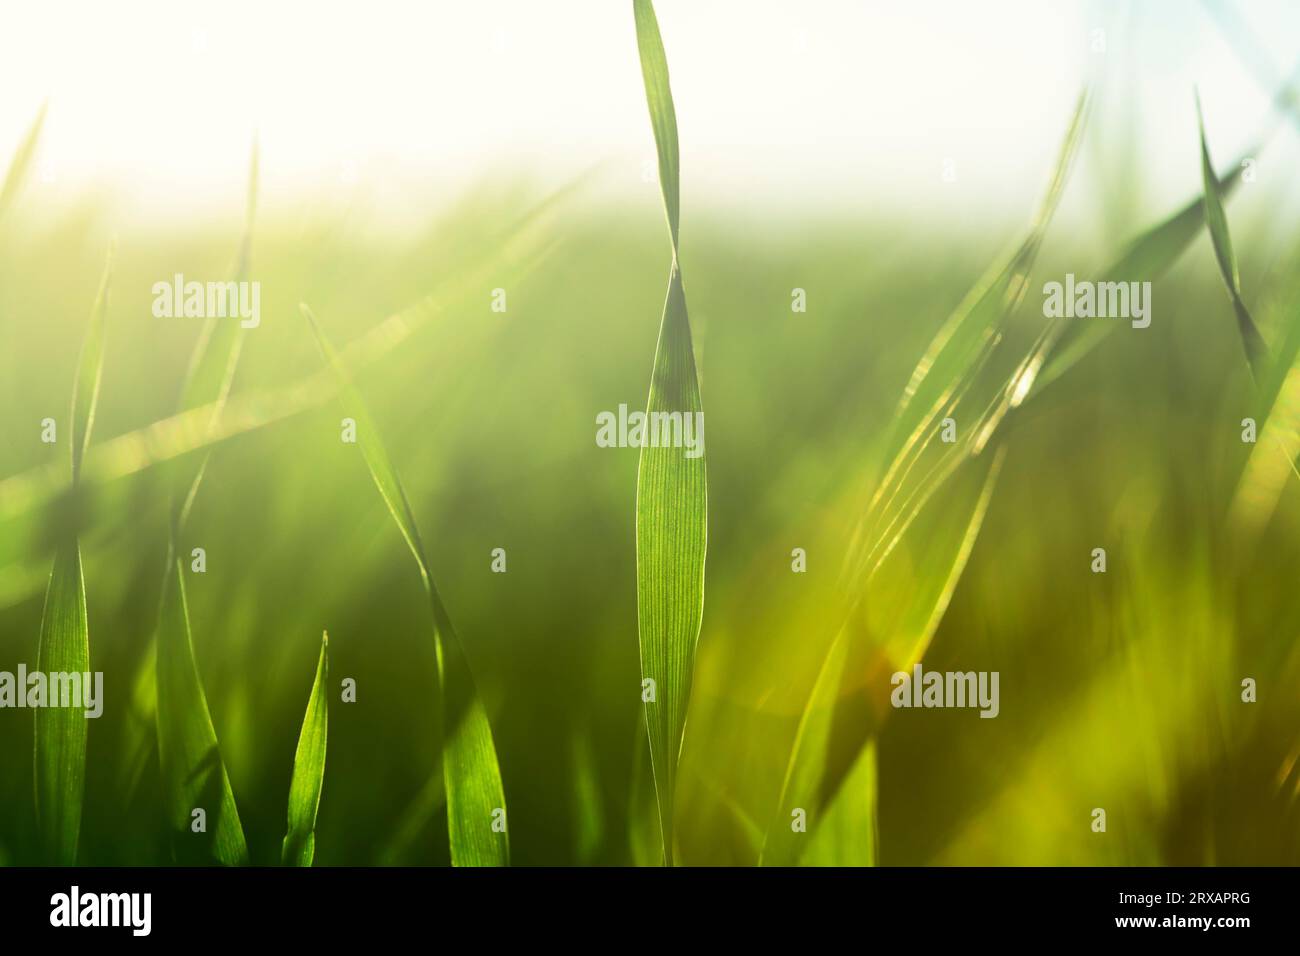 Barley seedlings growing on a field in closeup Stock Photo